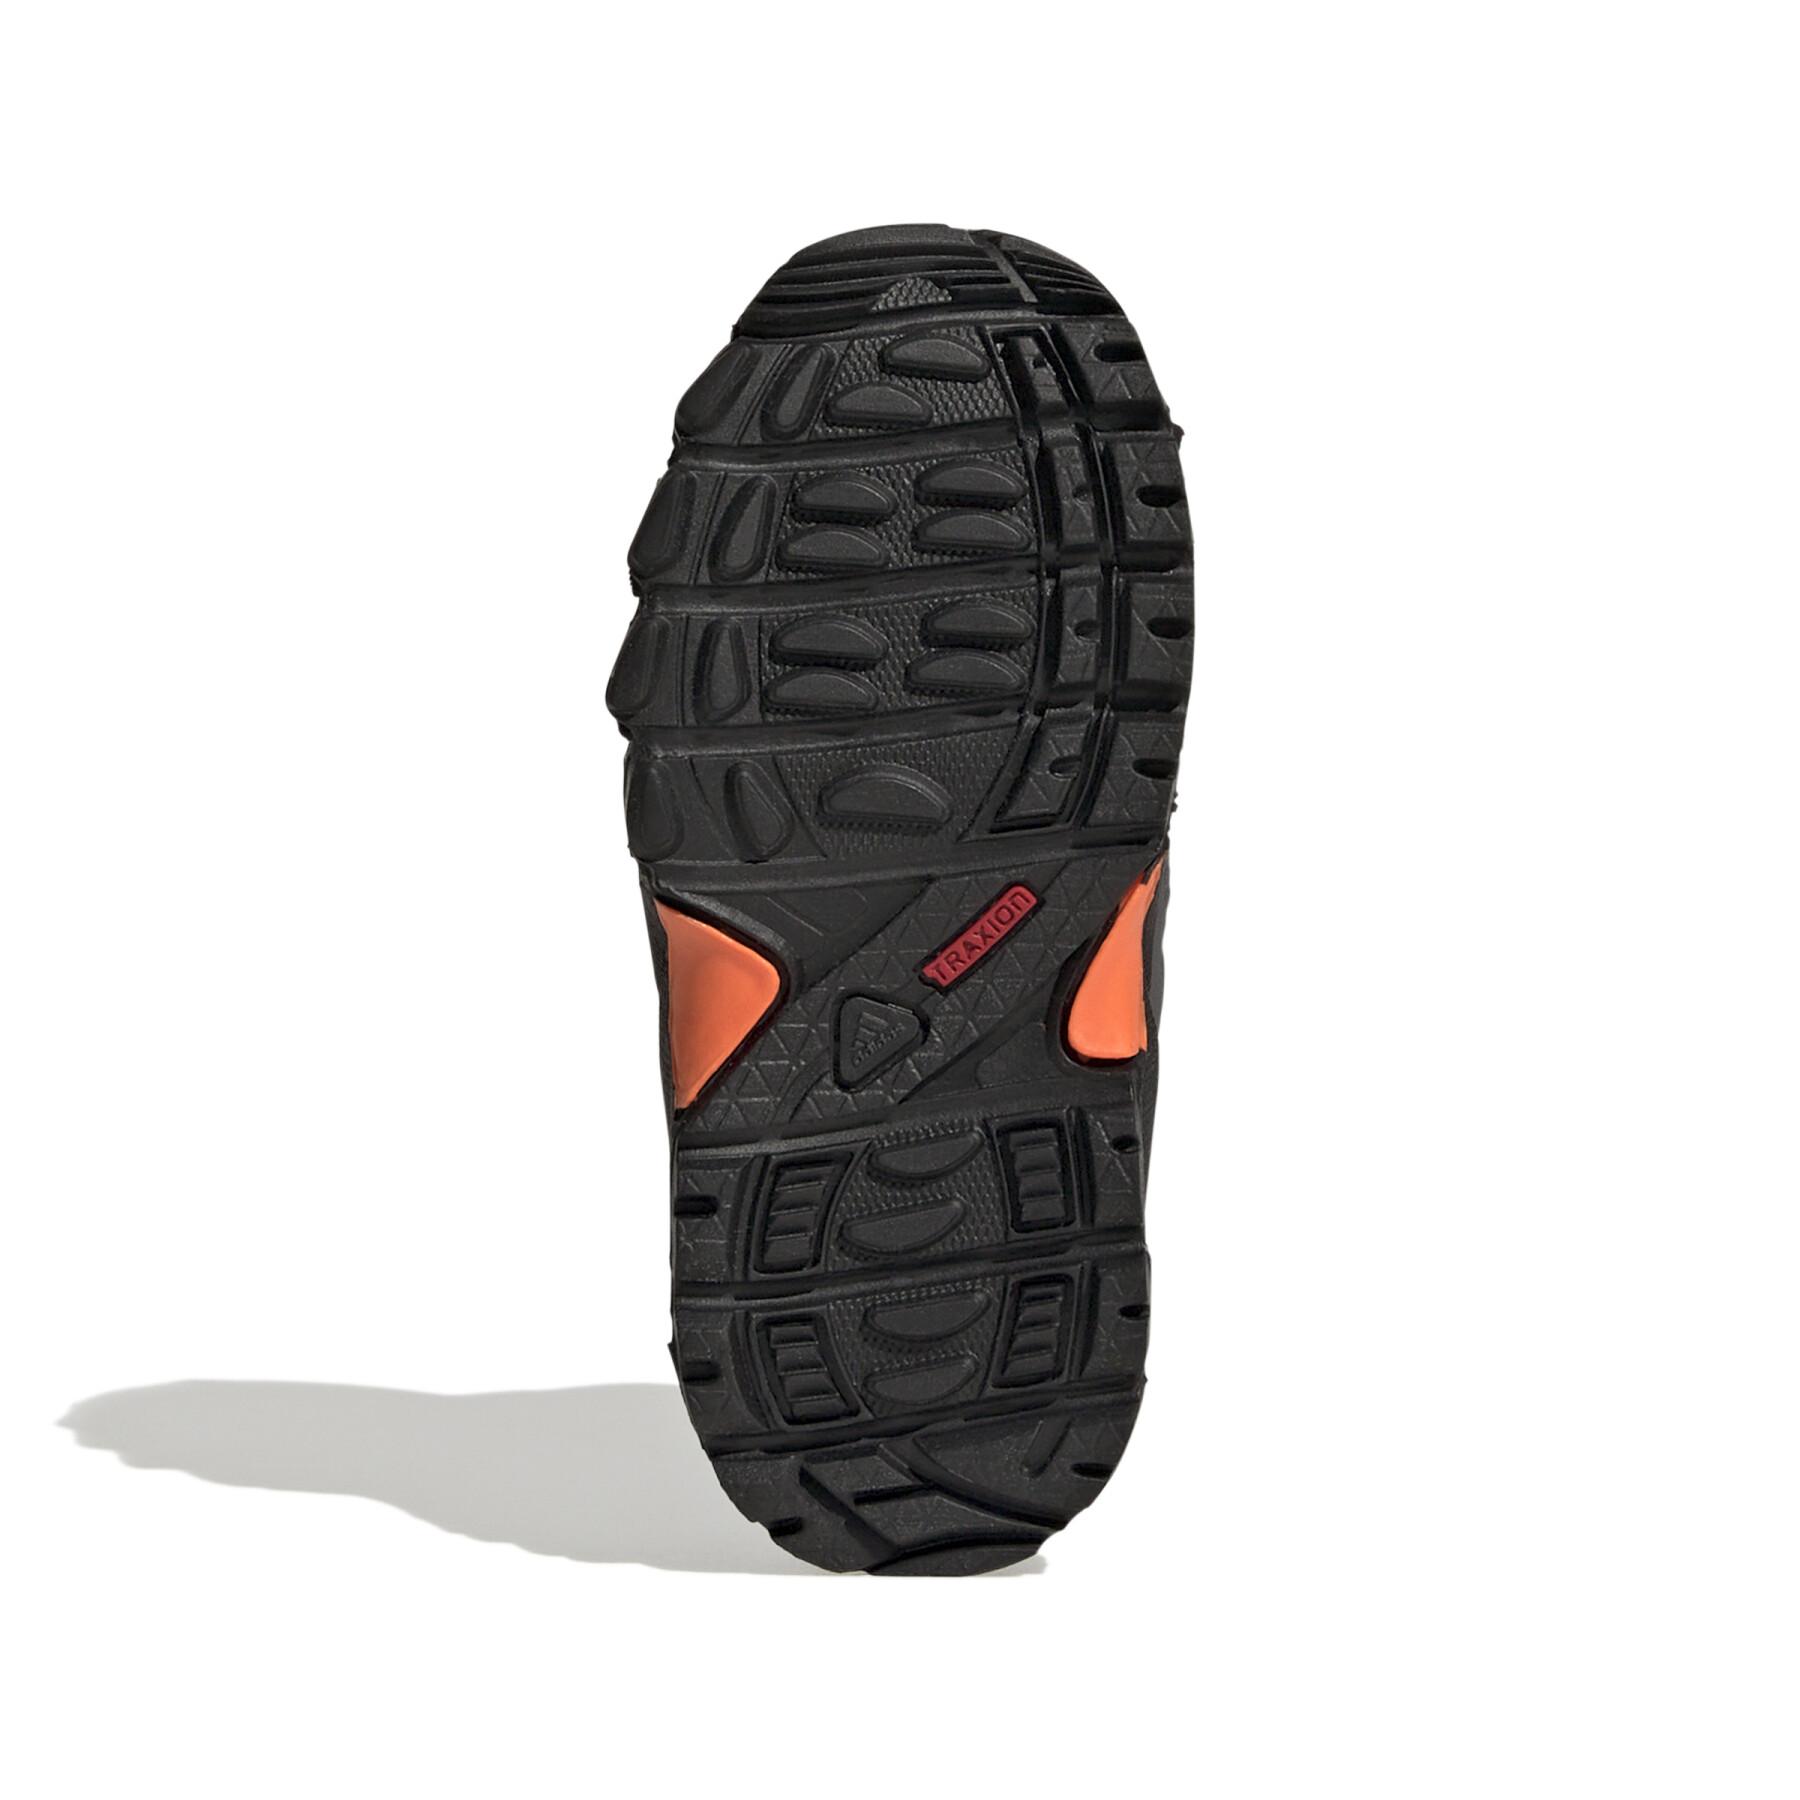 Chaussures de randonnée enfant adidas Terrex Mid Gtx